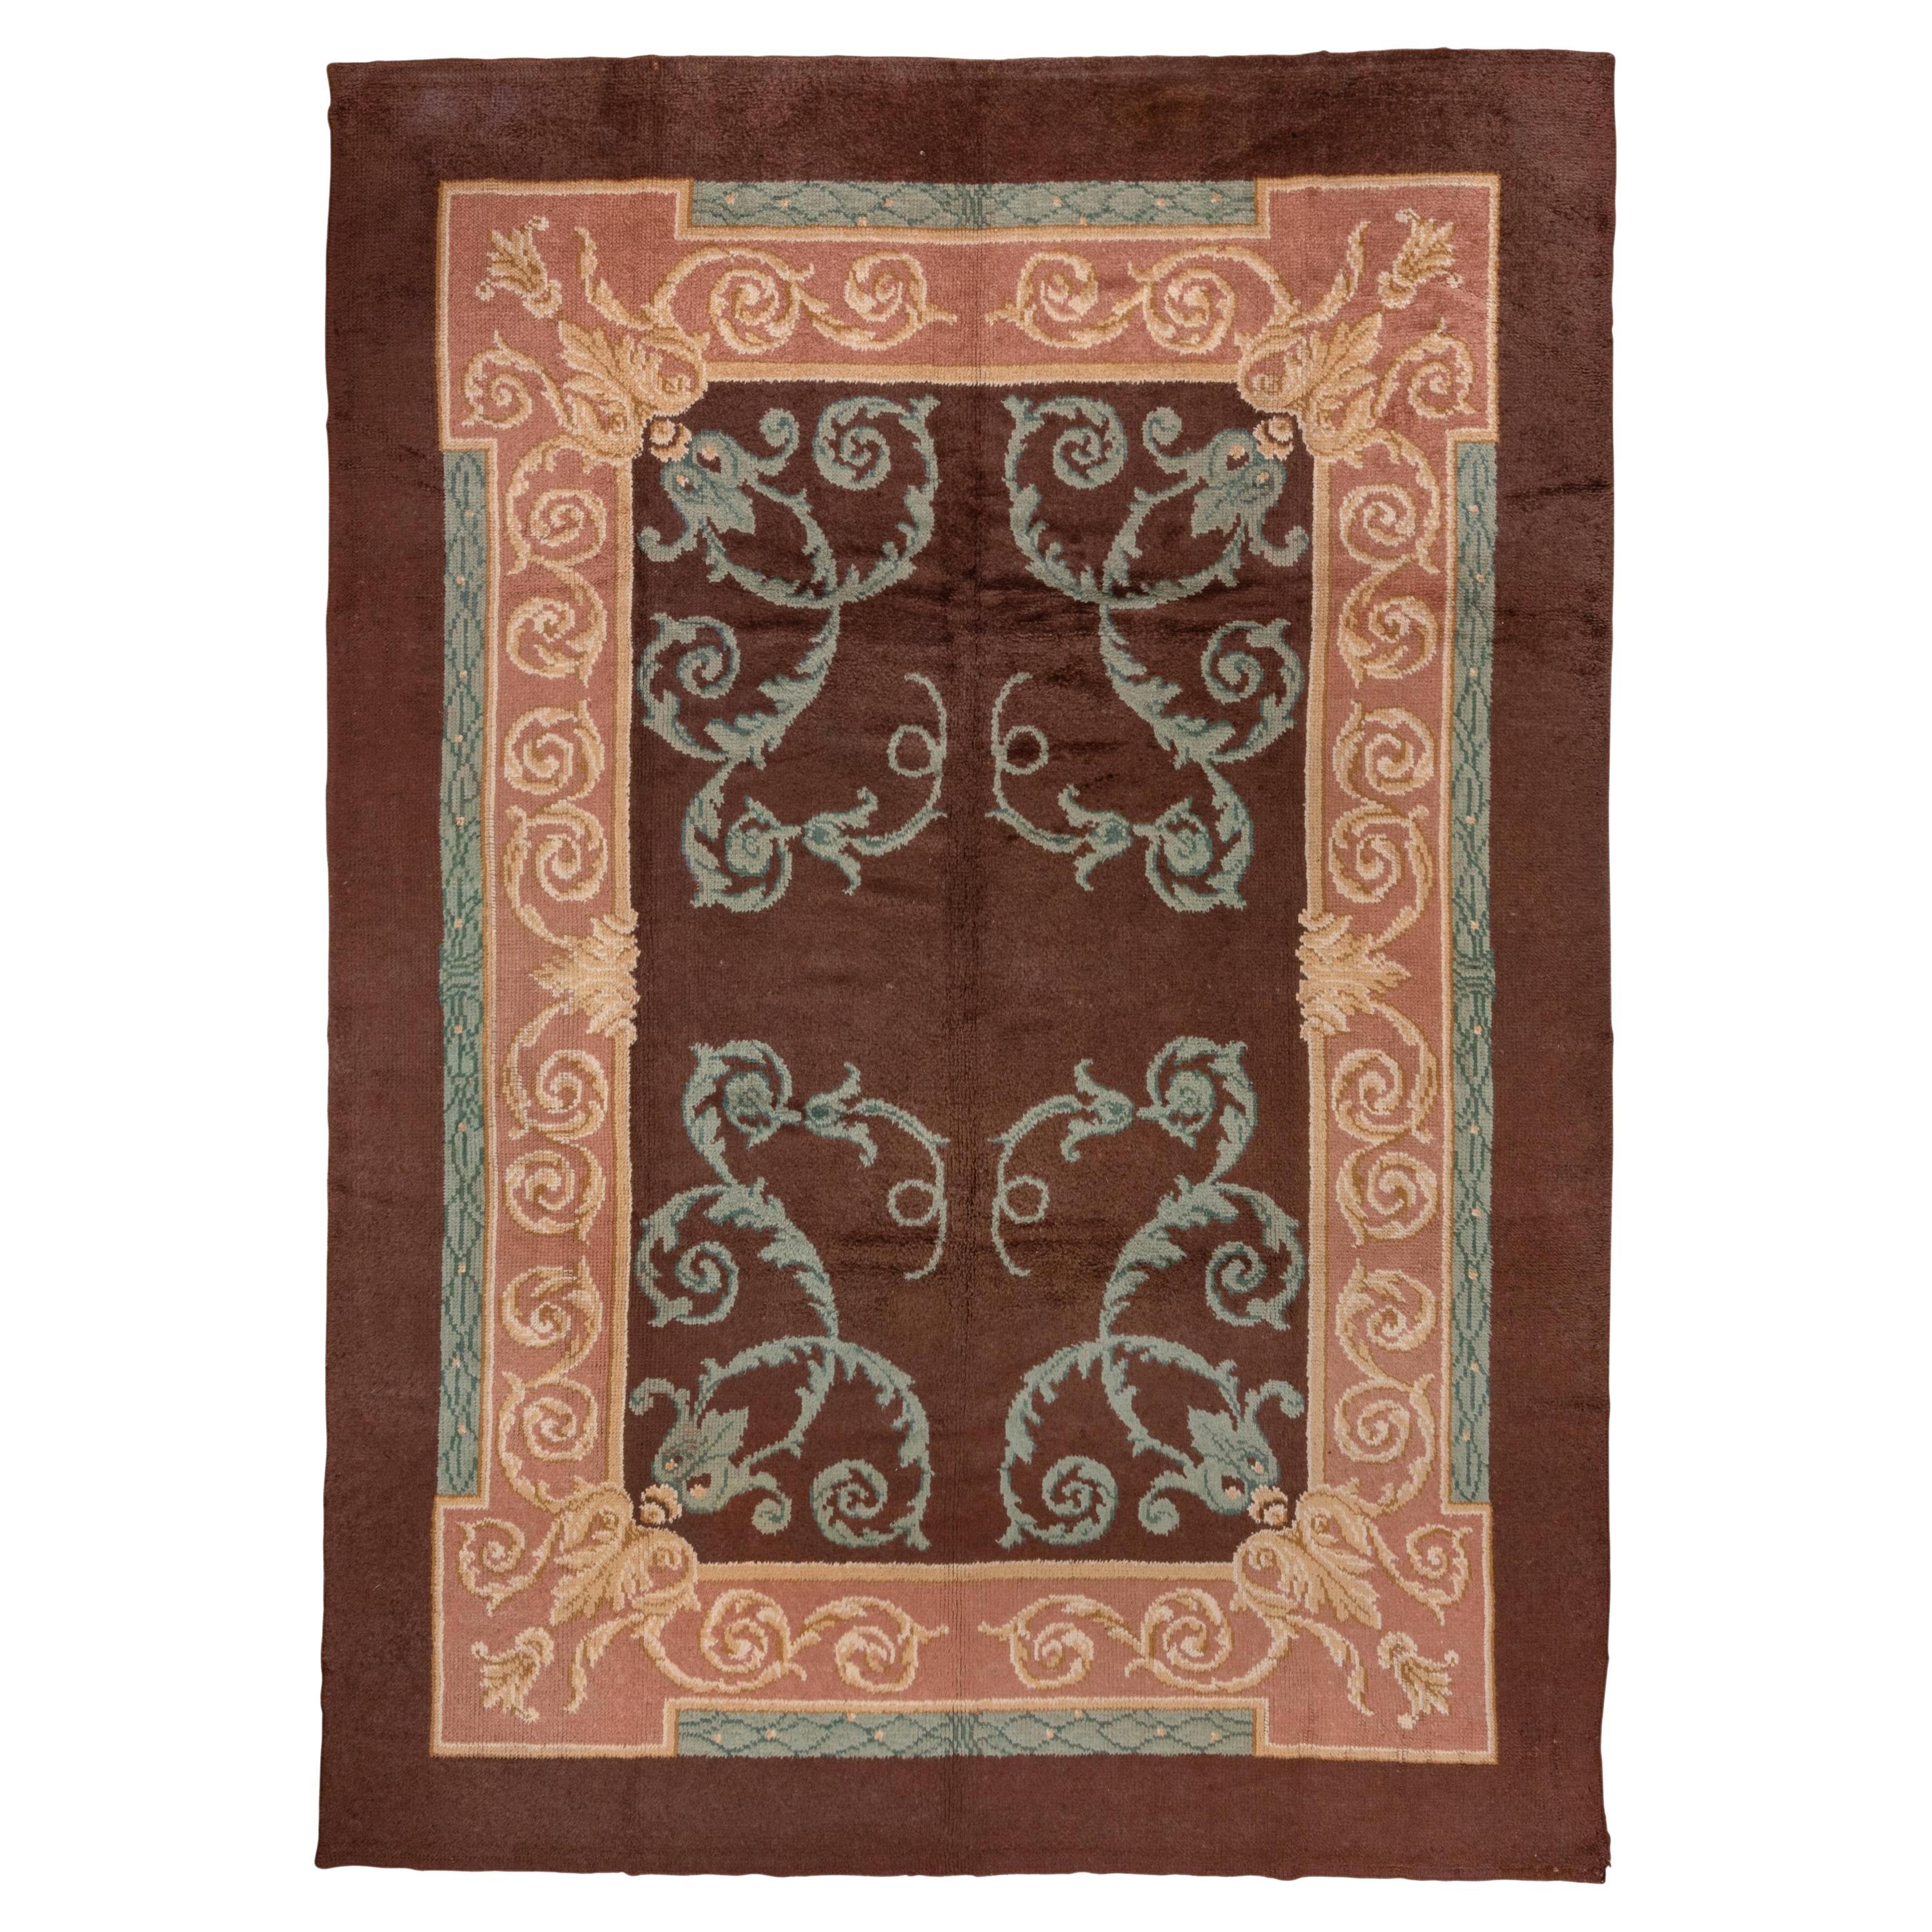 Antique European Carpet, Louis XV Style